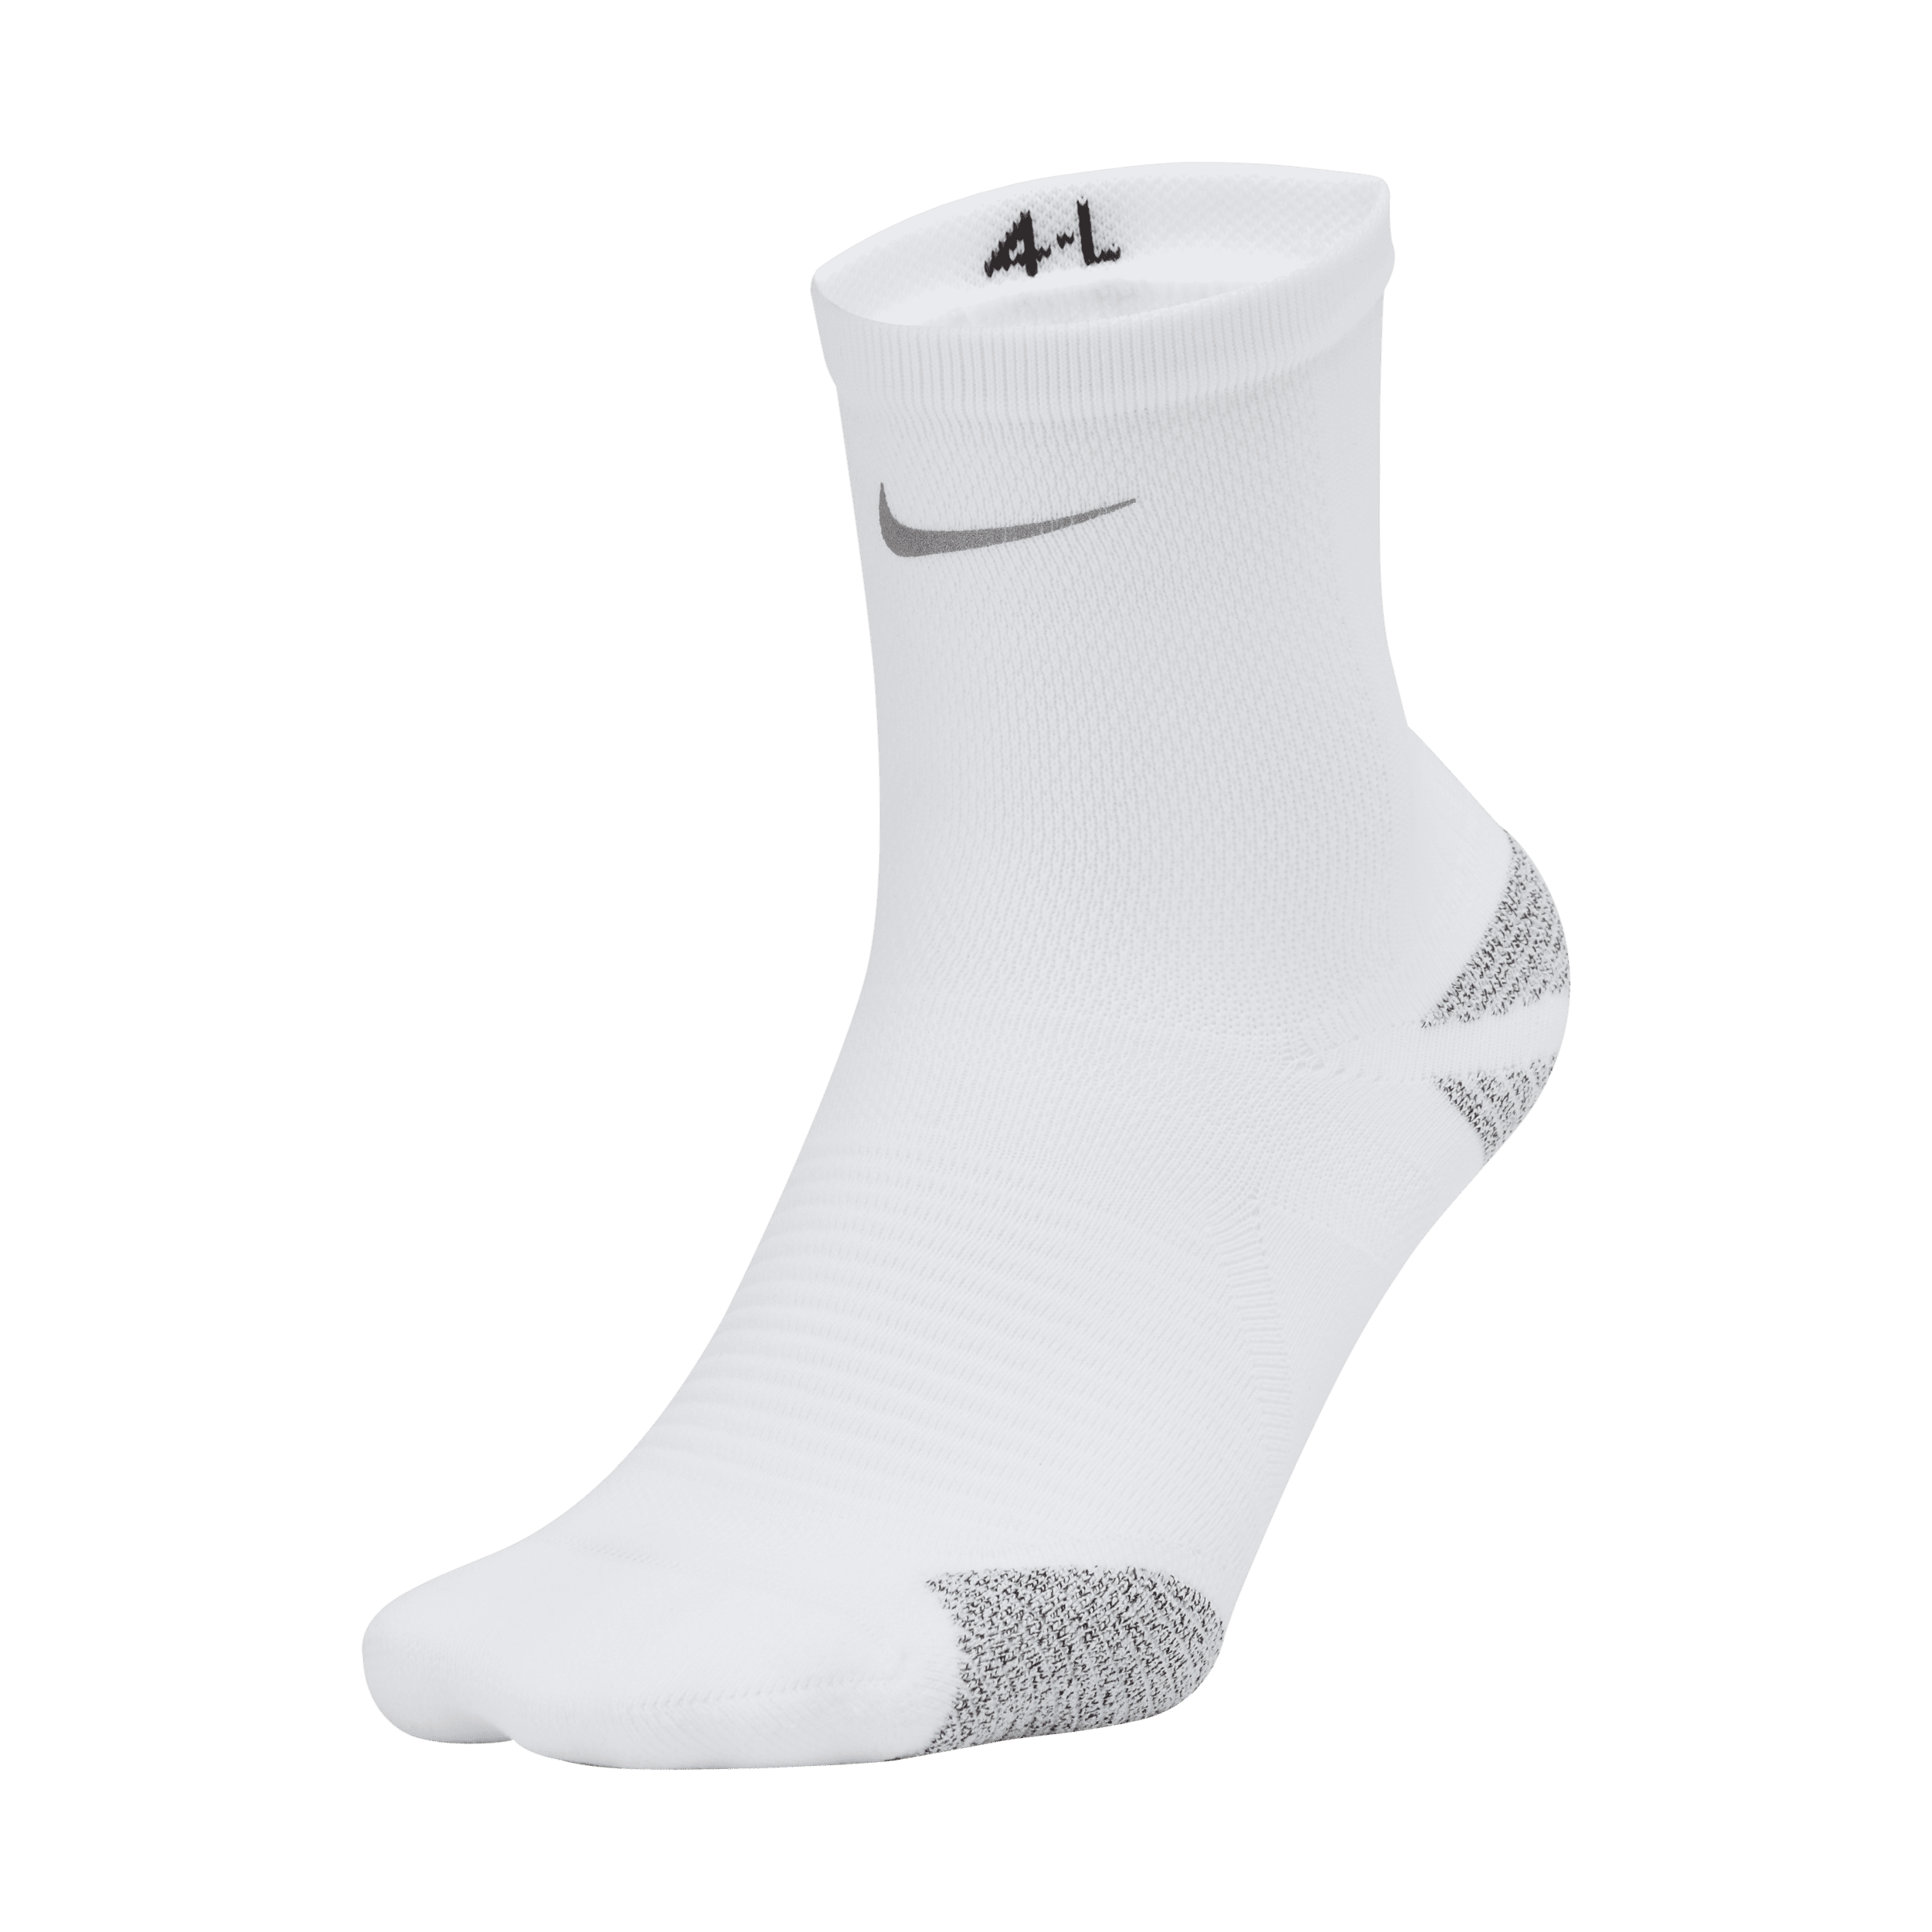 Calze alla caviglia Nike Racing - Bianco